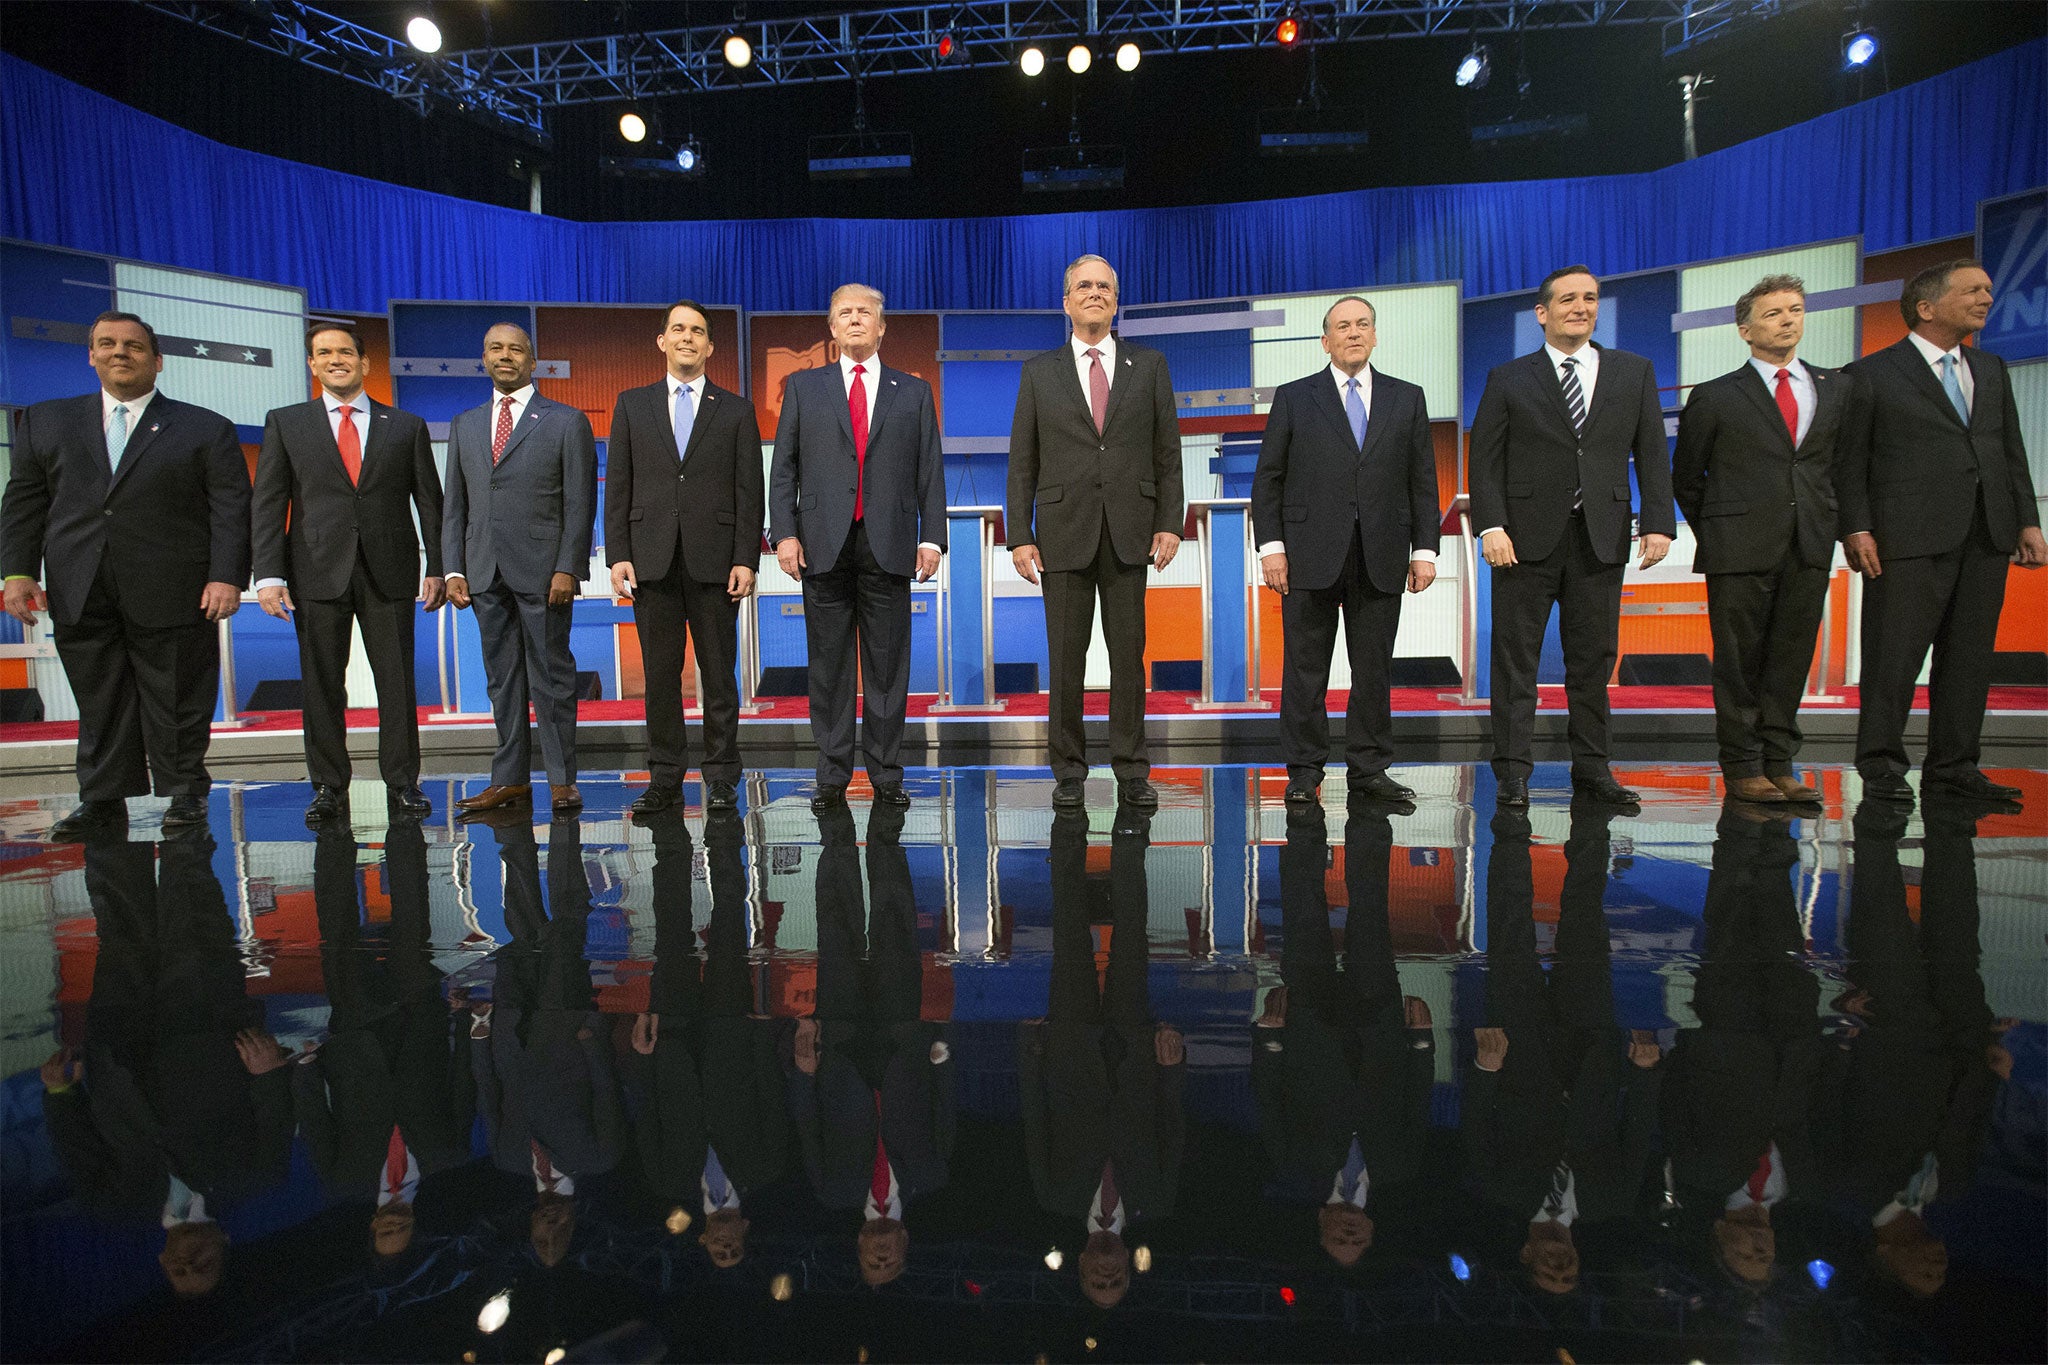 The ten Republican 'finalists' at the Fox News debate